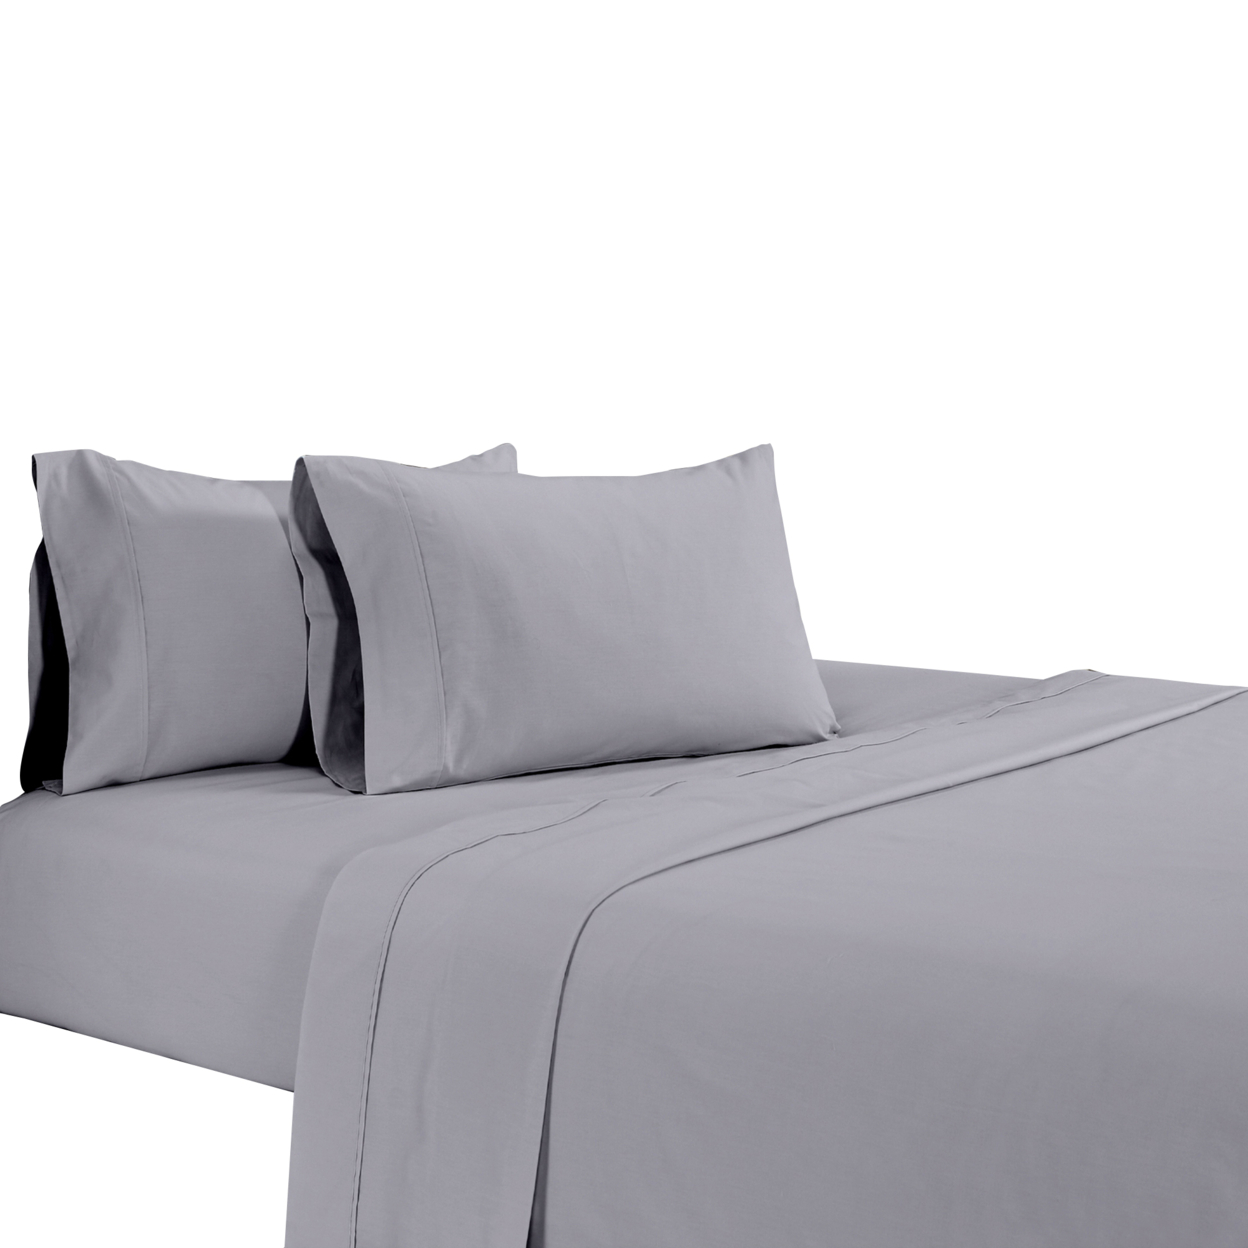 Matt 4 Piece California King Bed Sheet Set, Soft Organic Cotton, Light Gray- Saltoro Sherpi